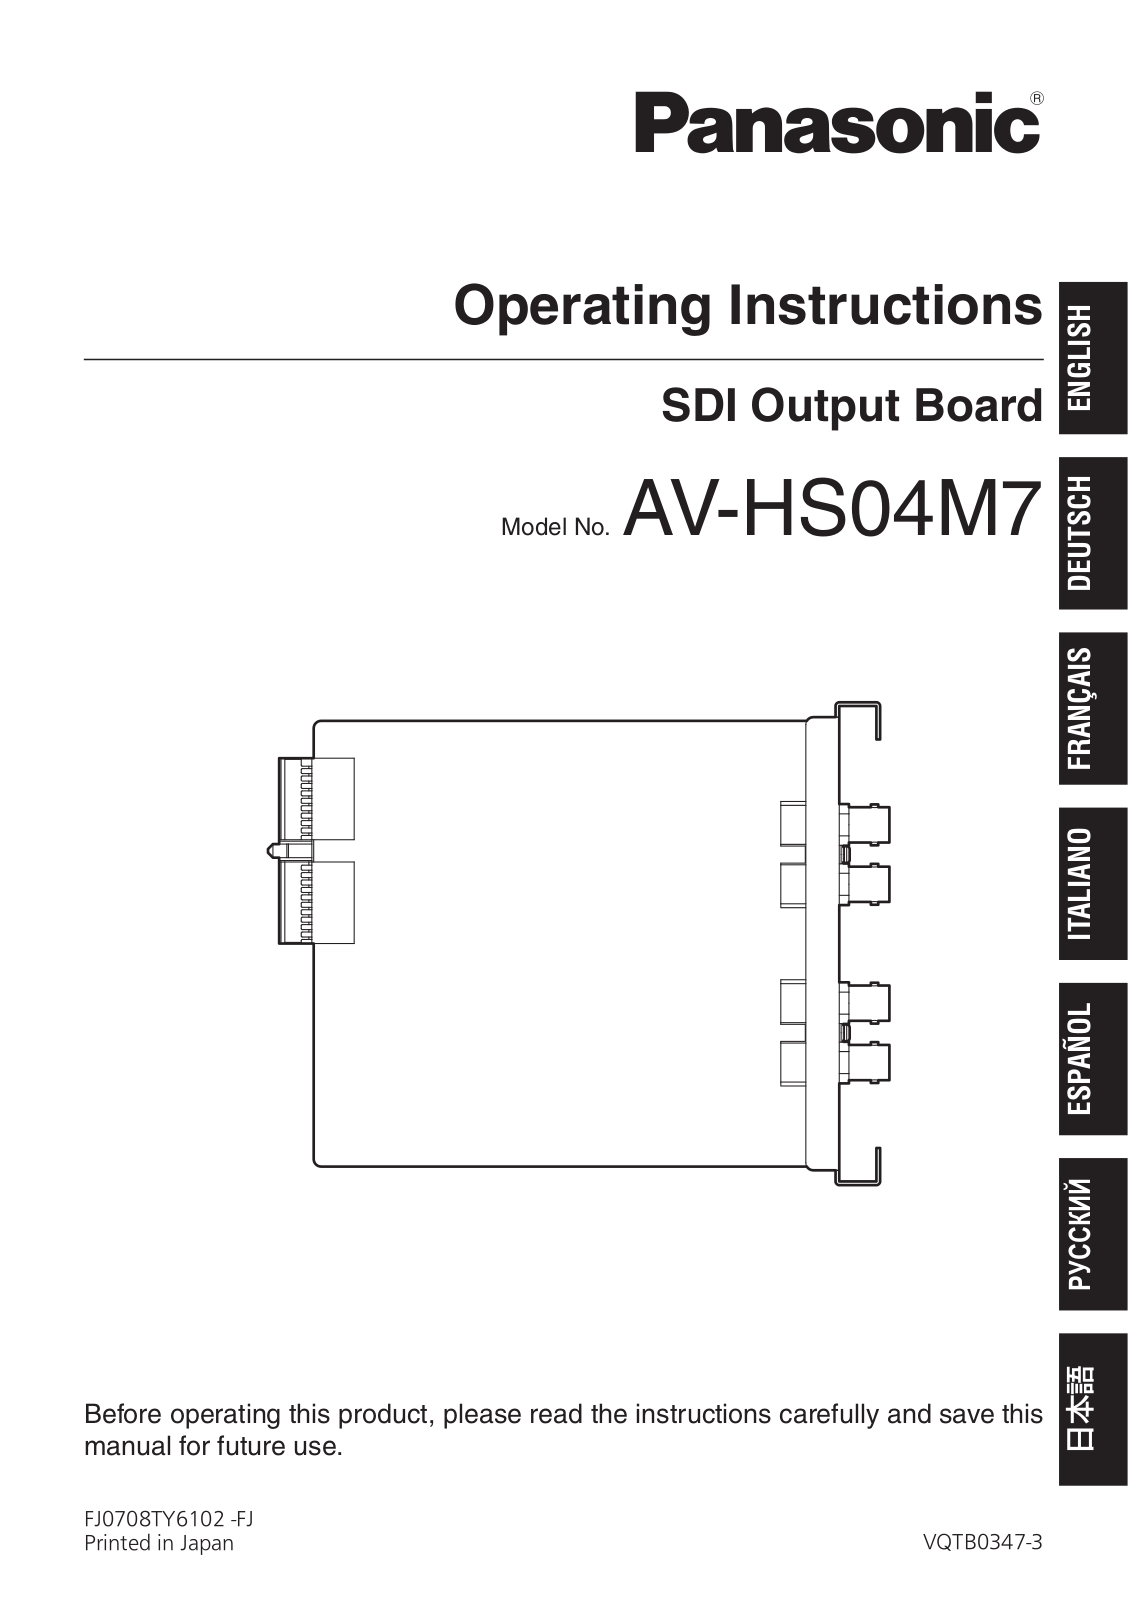 Panasonic av-hs04m7 operating instructions